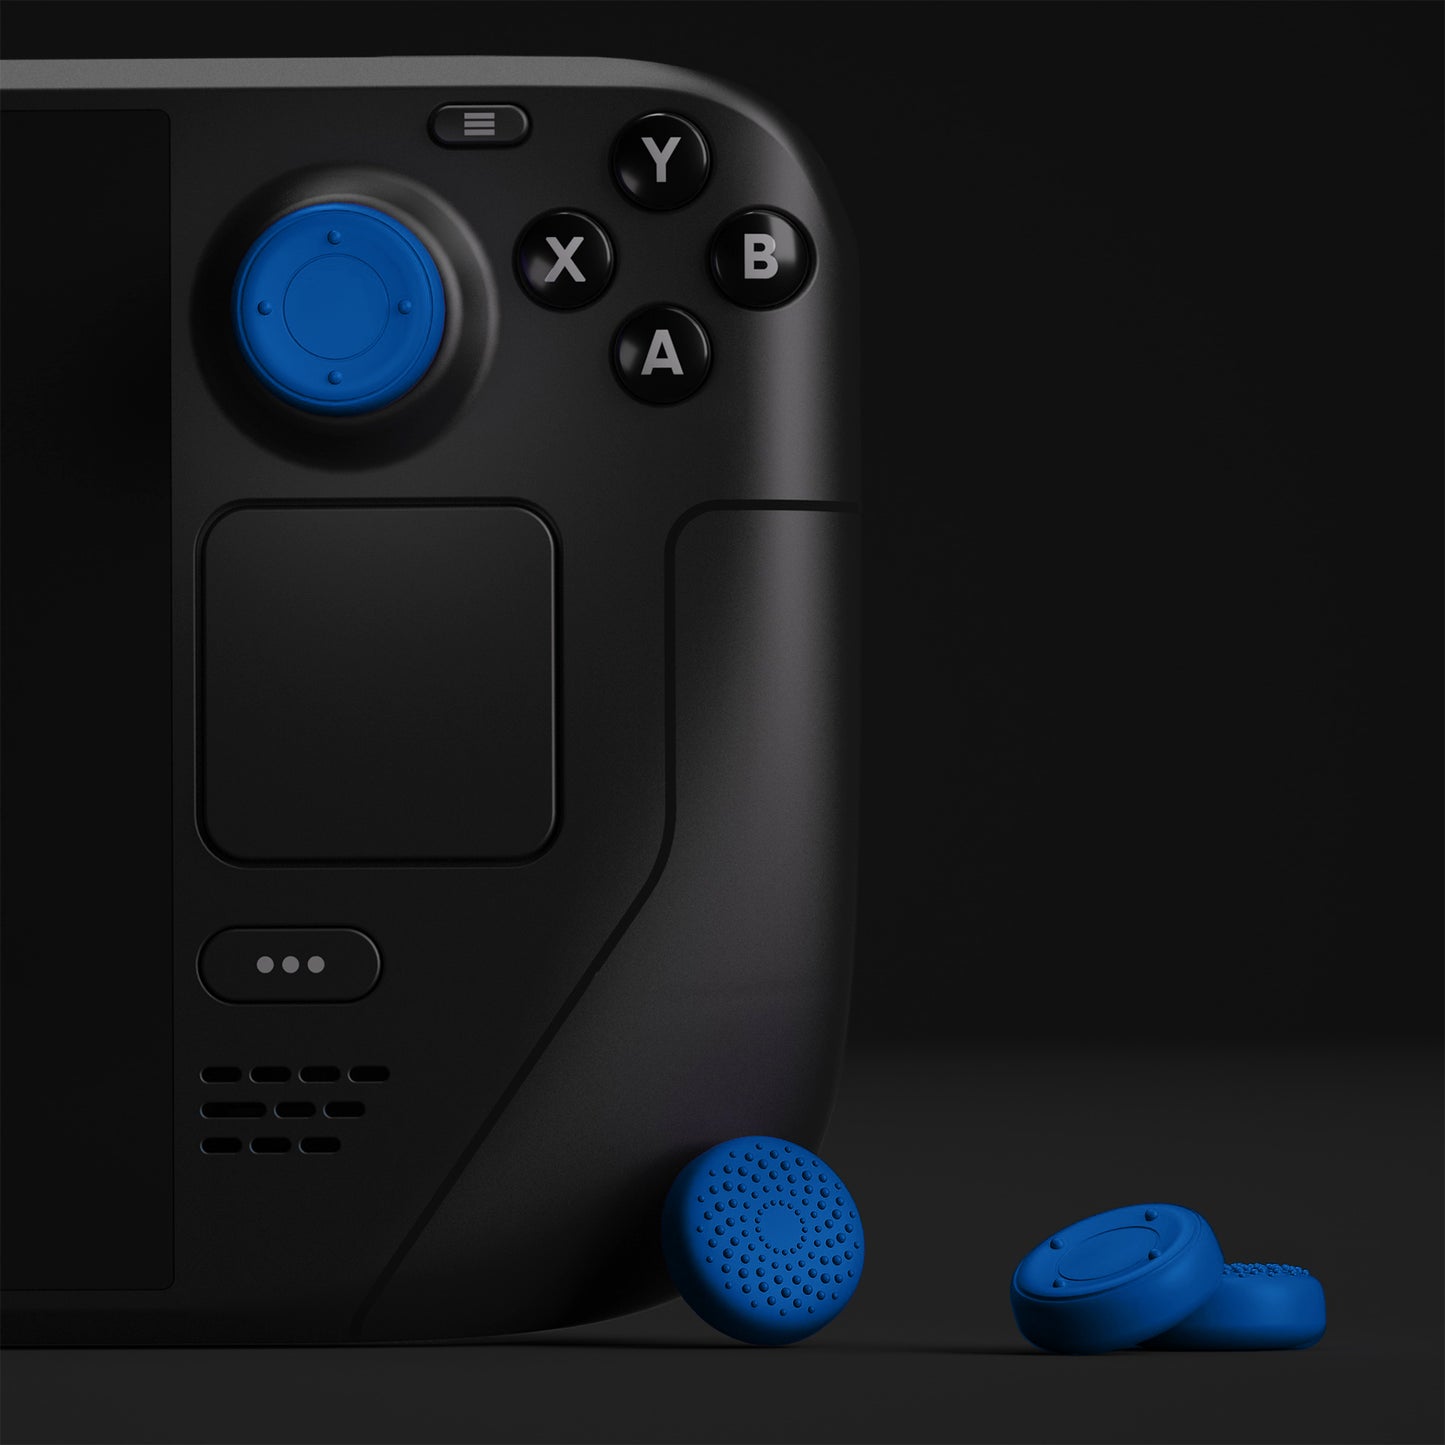 PlayVital Blue Thumb Grip Caps for Steam Deck, Silicone Thumbsticks Grips Joystick Caps for Steam Deck - Raised Dots & Studded Design - YFSDM020 PlayVital